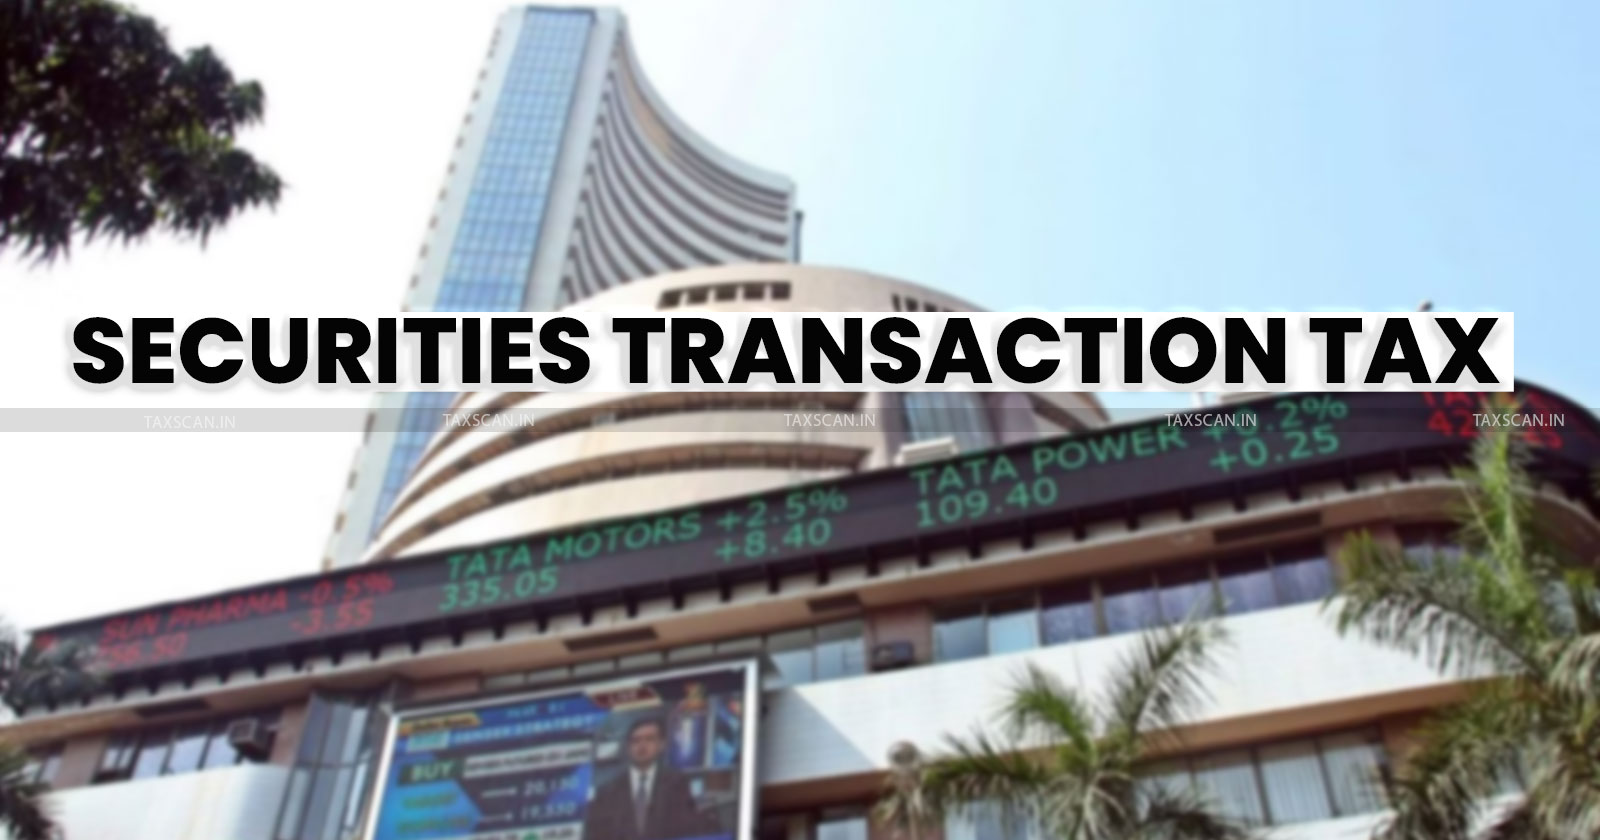 Income Tax - ITAT Delhi - Bombay Stock Exchange - Securities Transaction Tax - Sham transaction - taxscan